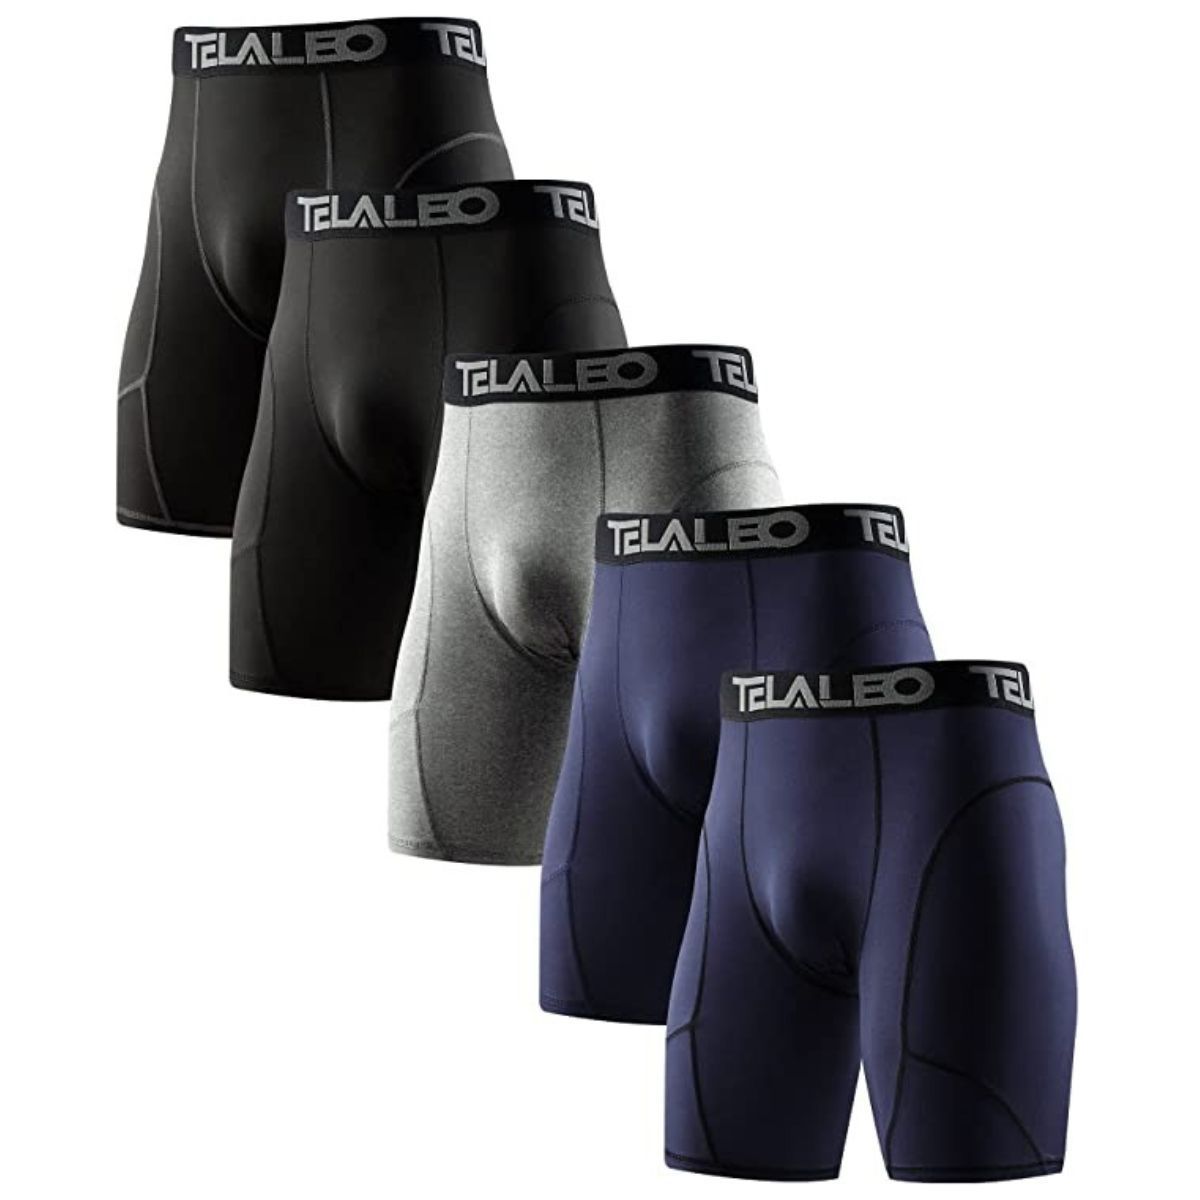 Runhit Compression Shorts for Men,Mens Underwear Spandex Shorts Workout Running 